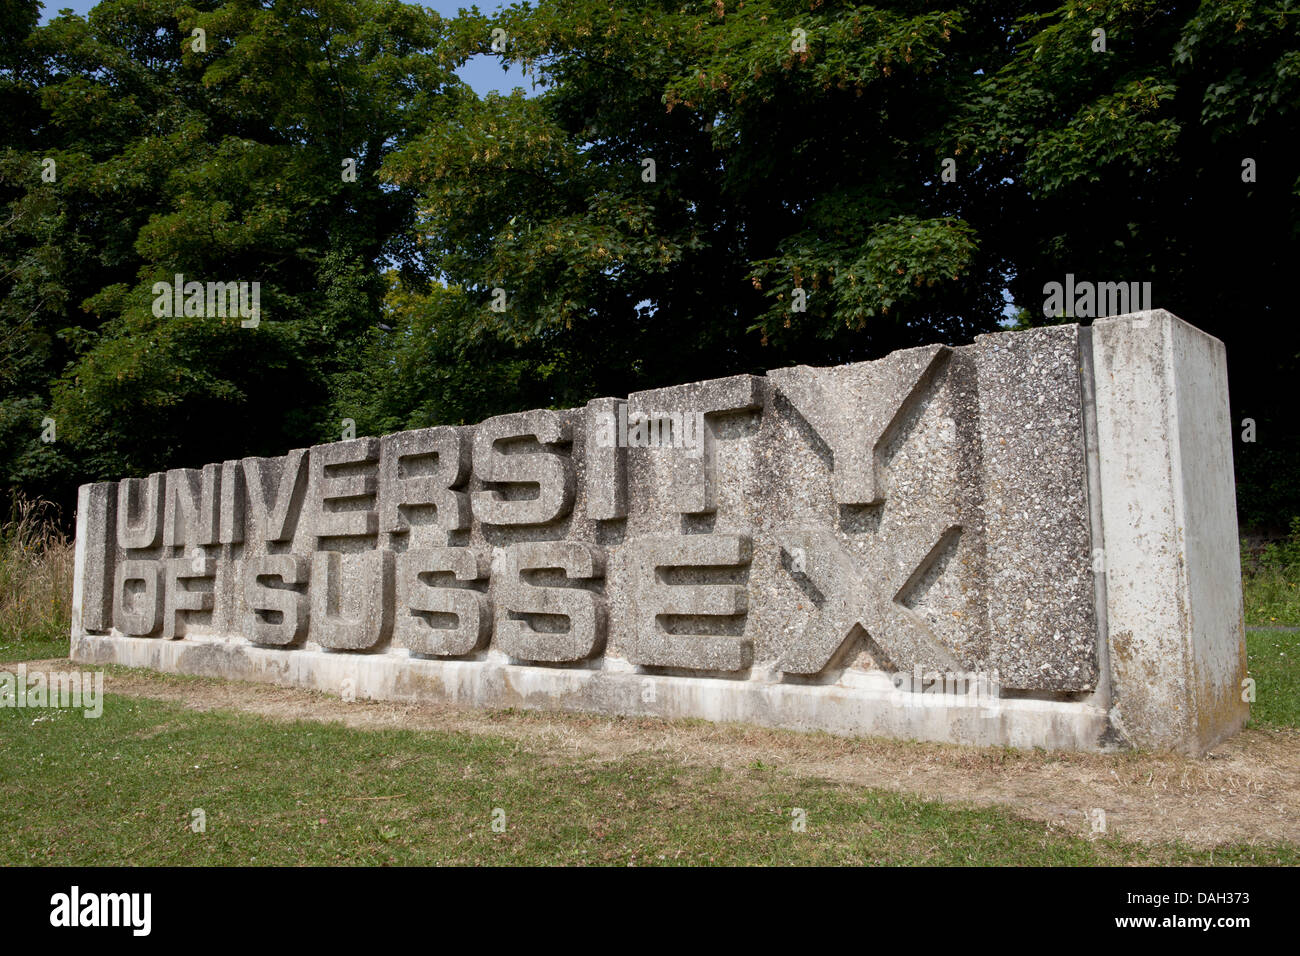 Sussex University sign Stock Photo